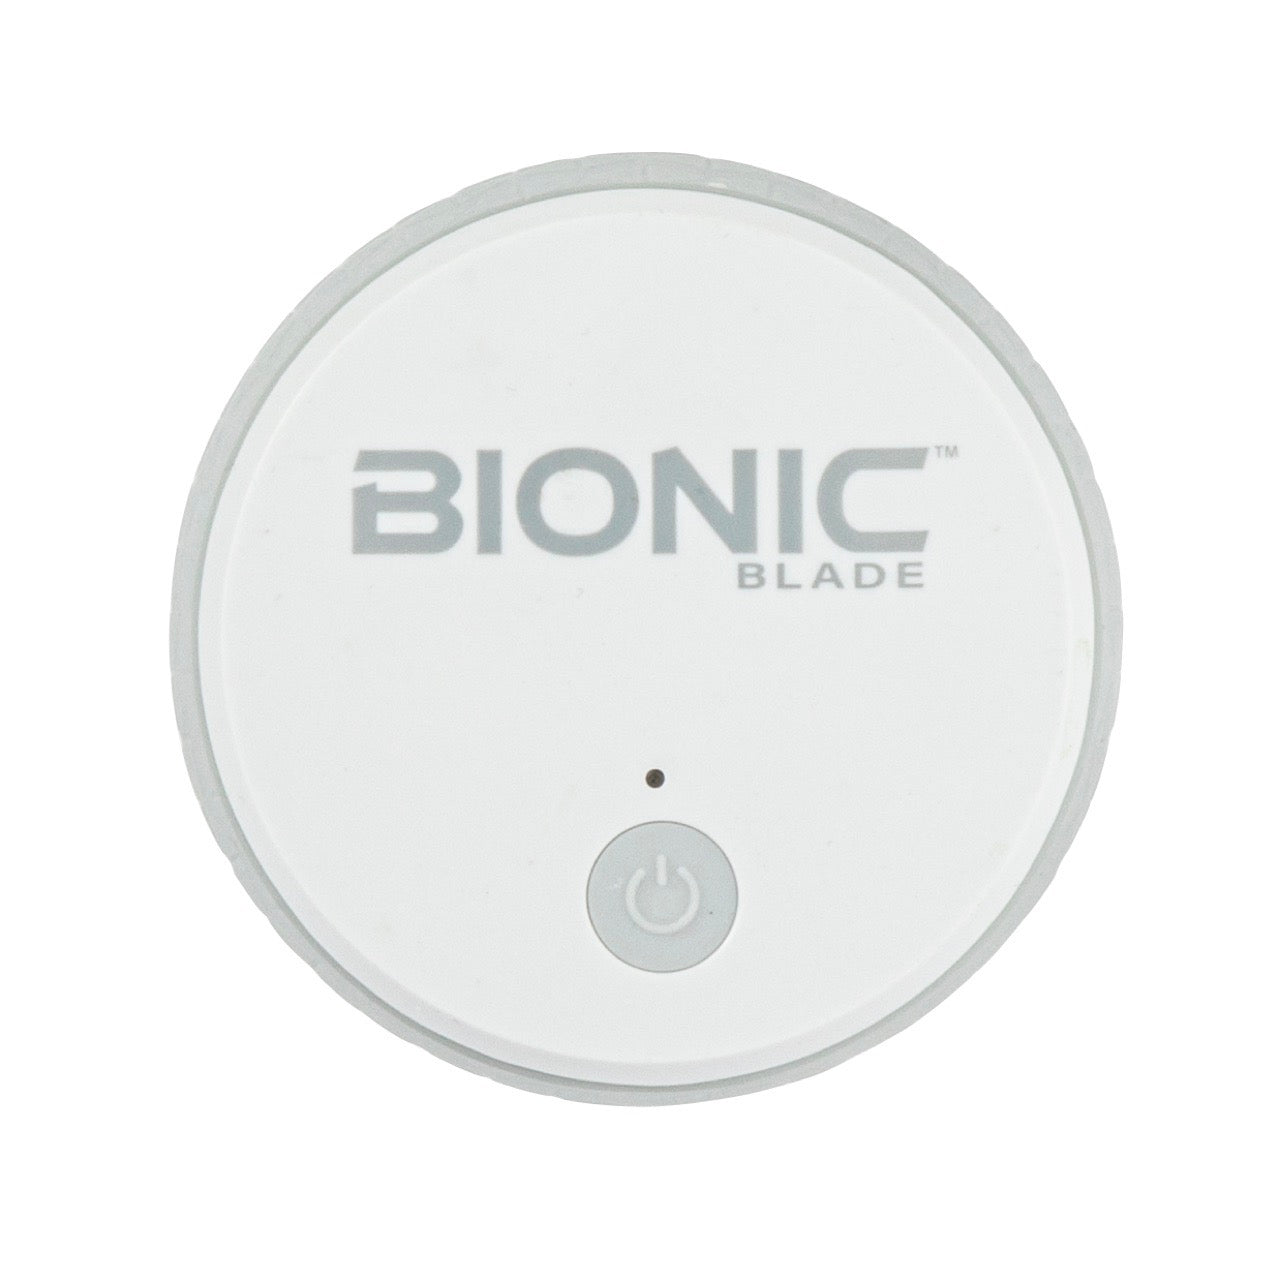 Bionic Blade Portable Blender - 18,000 RPM, USB Rechargeable Battery, Multiple Colors